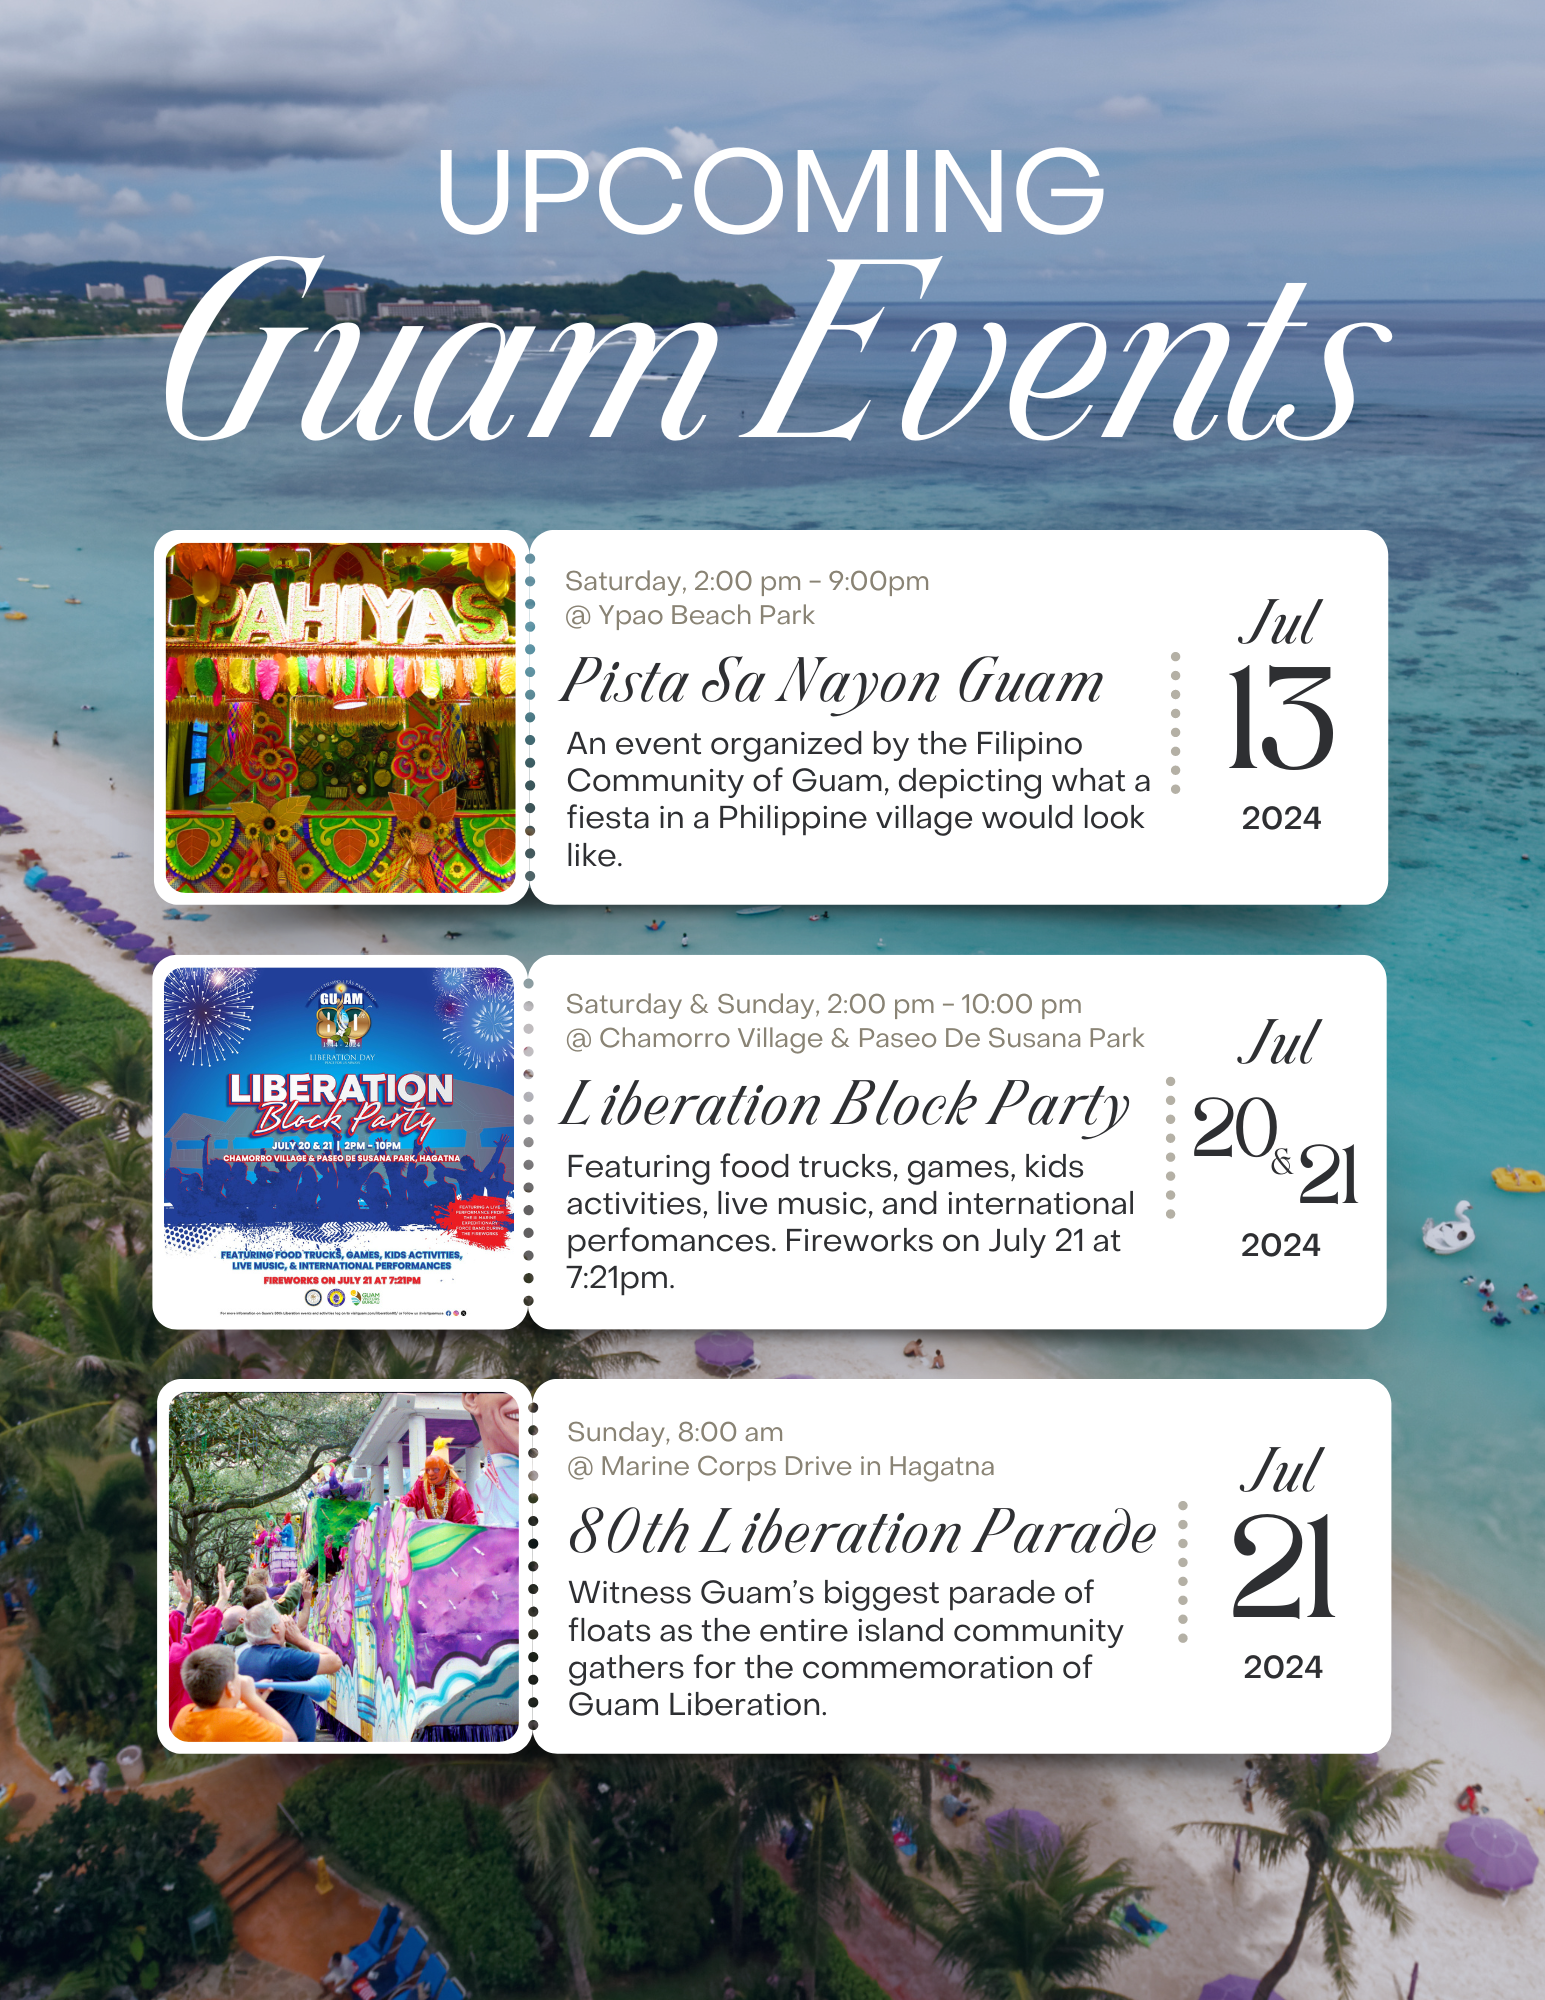 Guam Event Information (July)